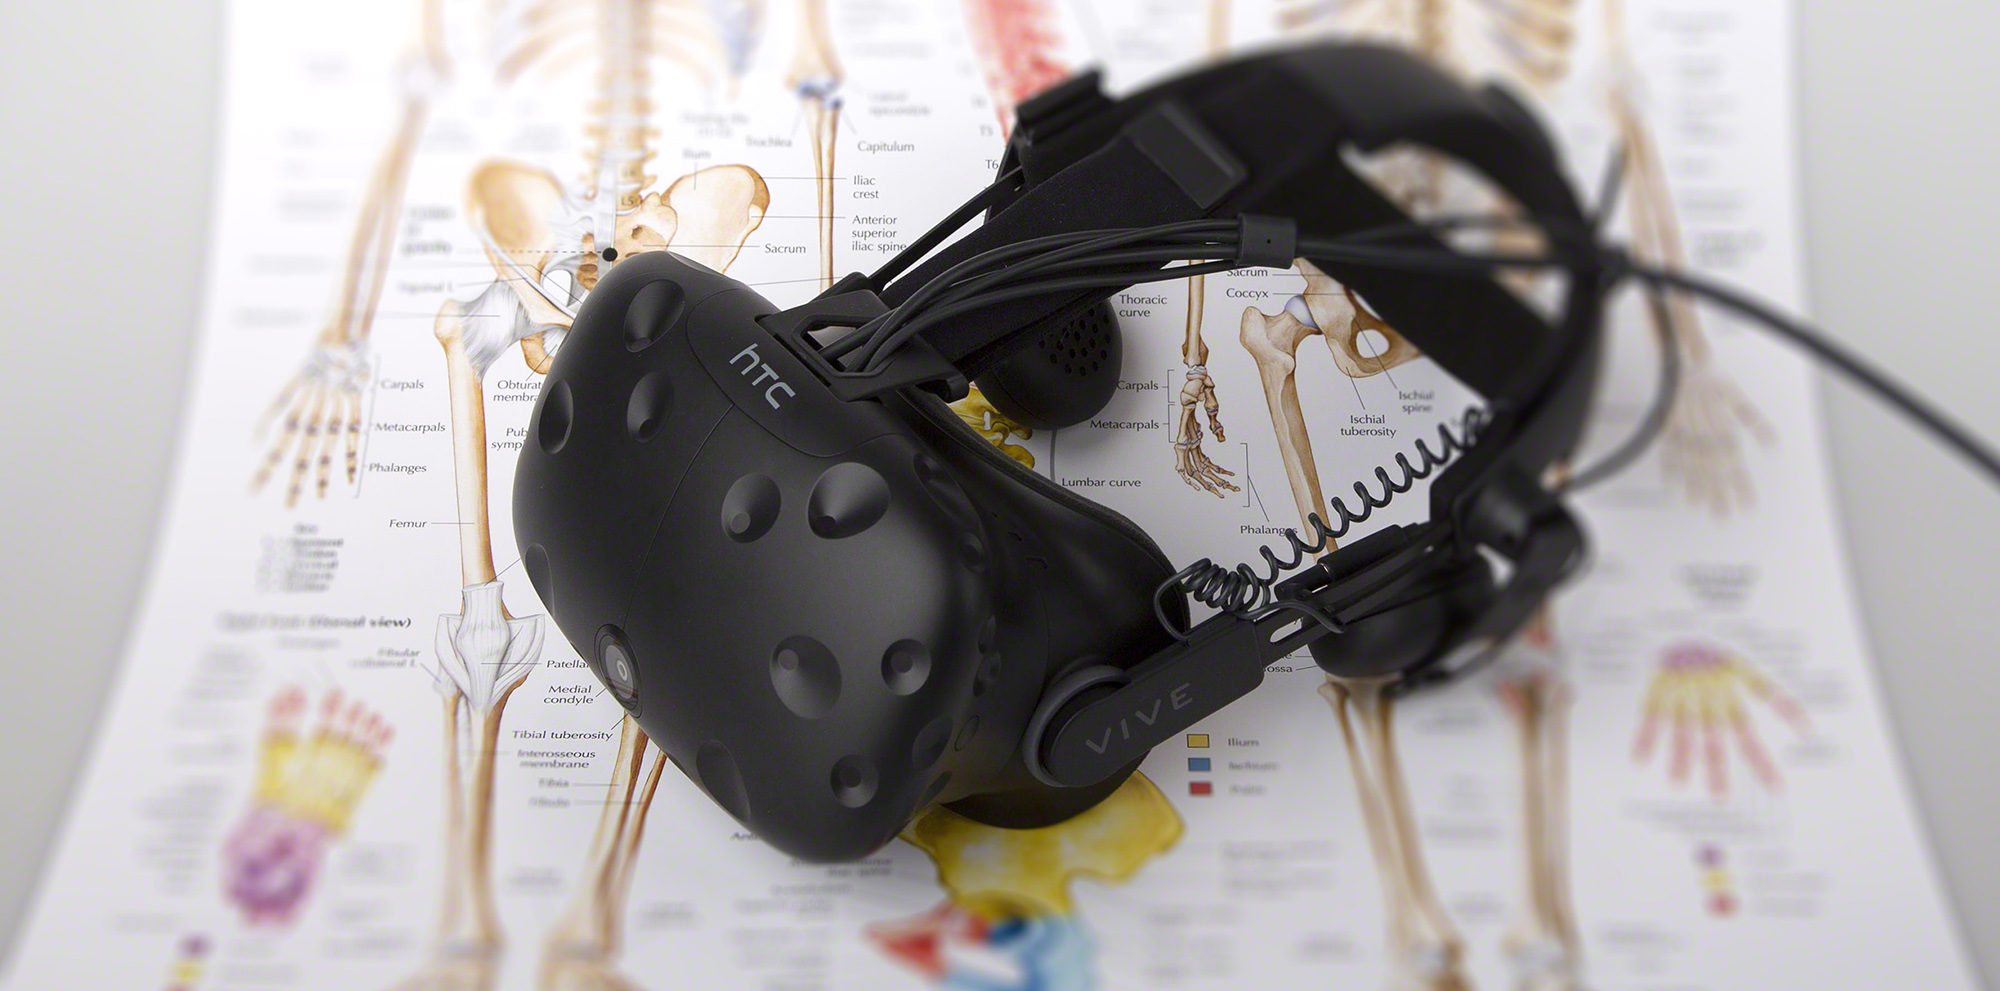 VR headset sitting on top of a medical illustration